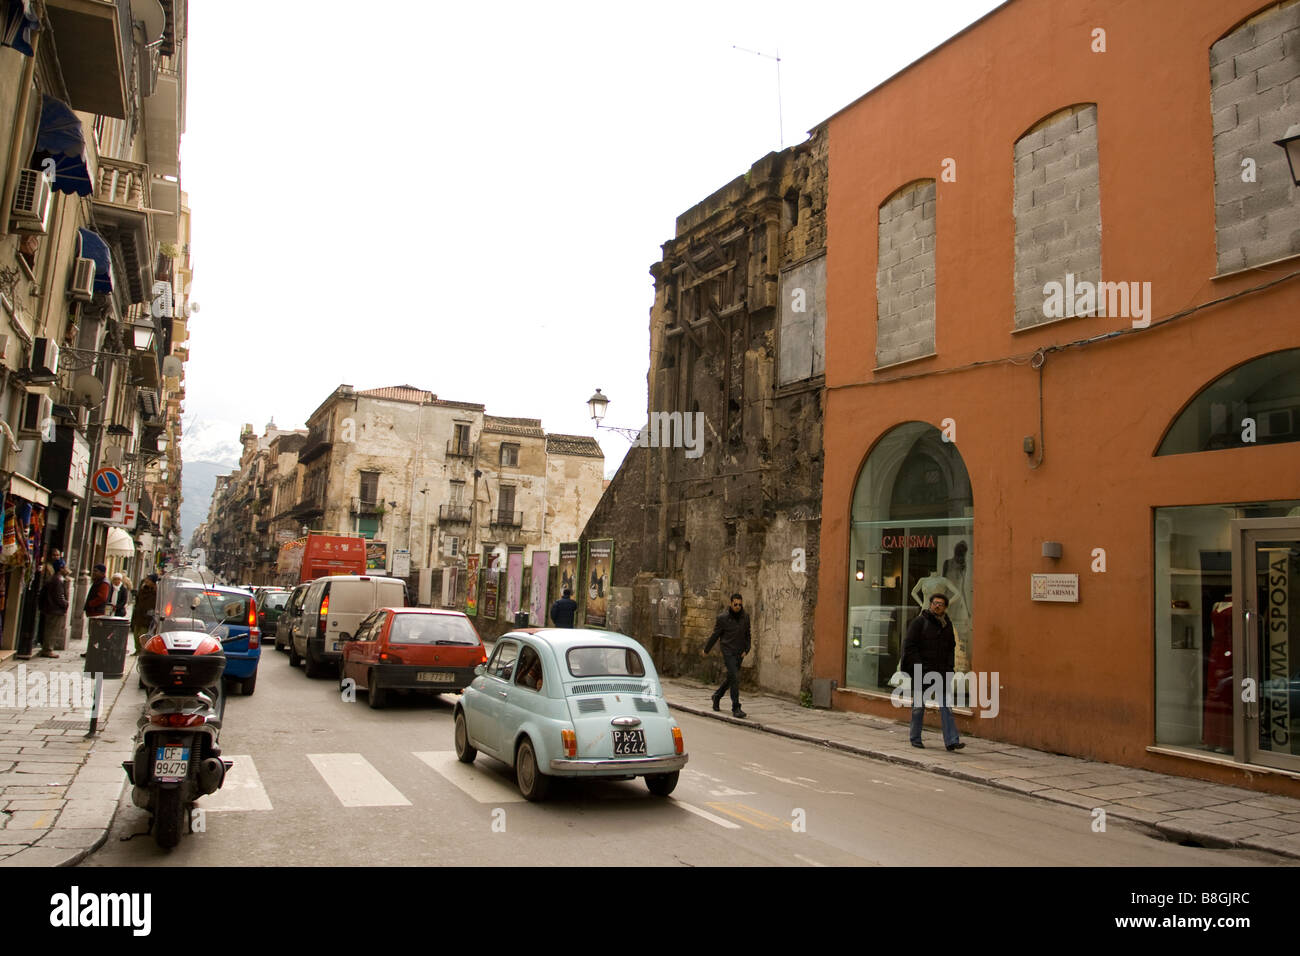 Street scene on Via Maqueda, Sicily, Italy. Stock Photo